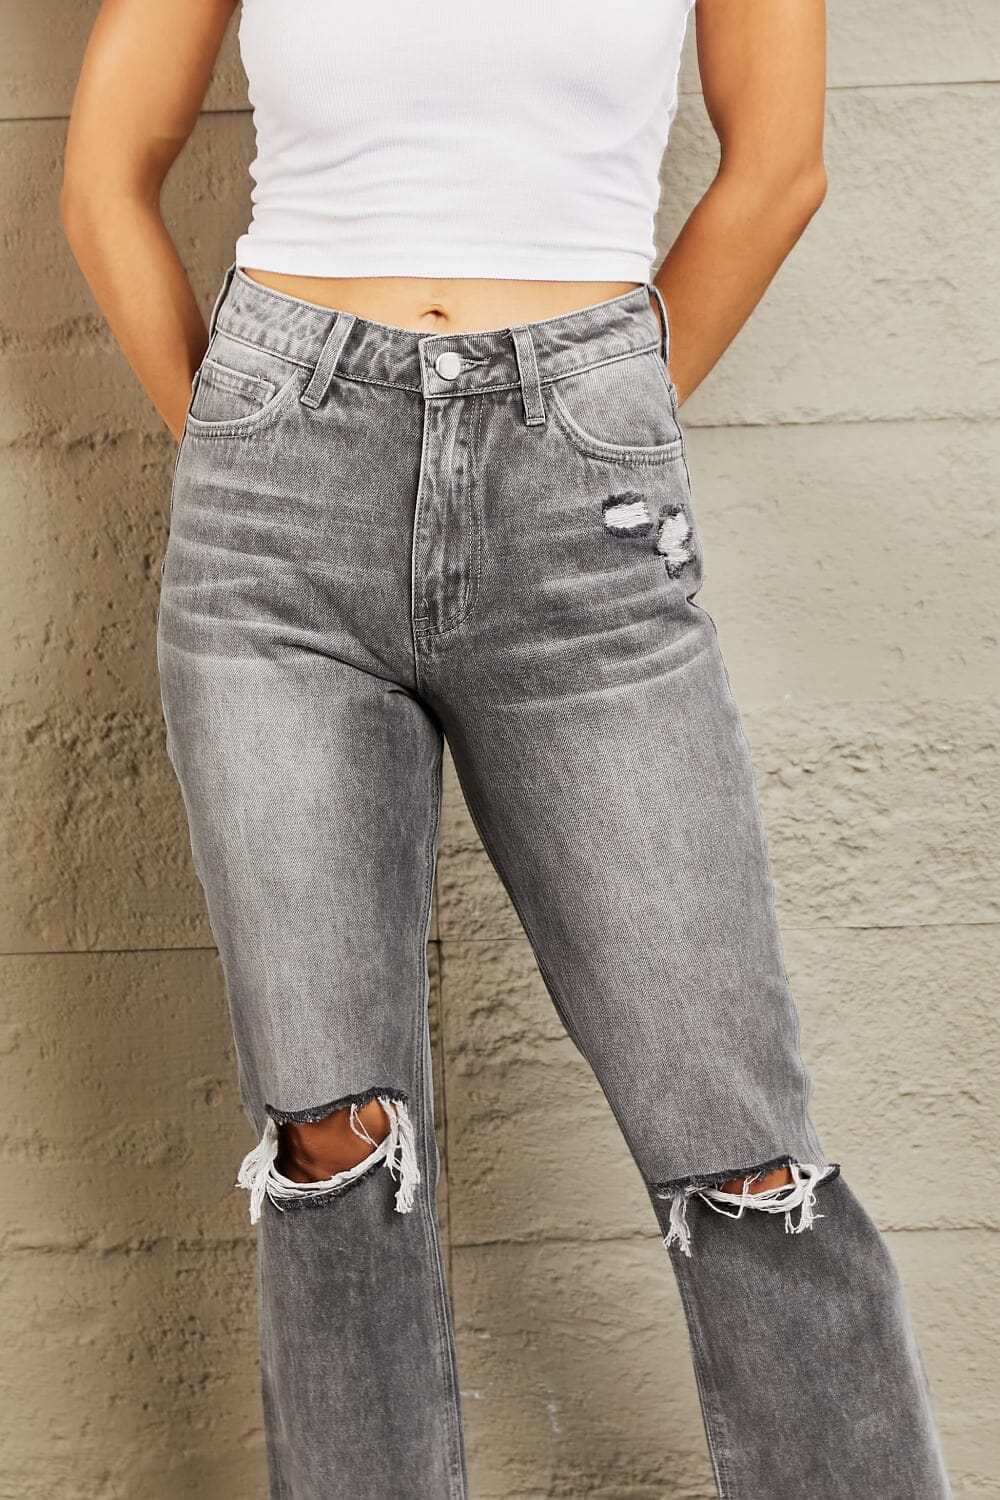 BAYEAS Heather Grey Stone Wash Distressed Cropped Straight Jeans jeans jehouze 